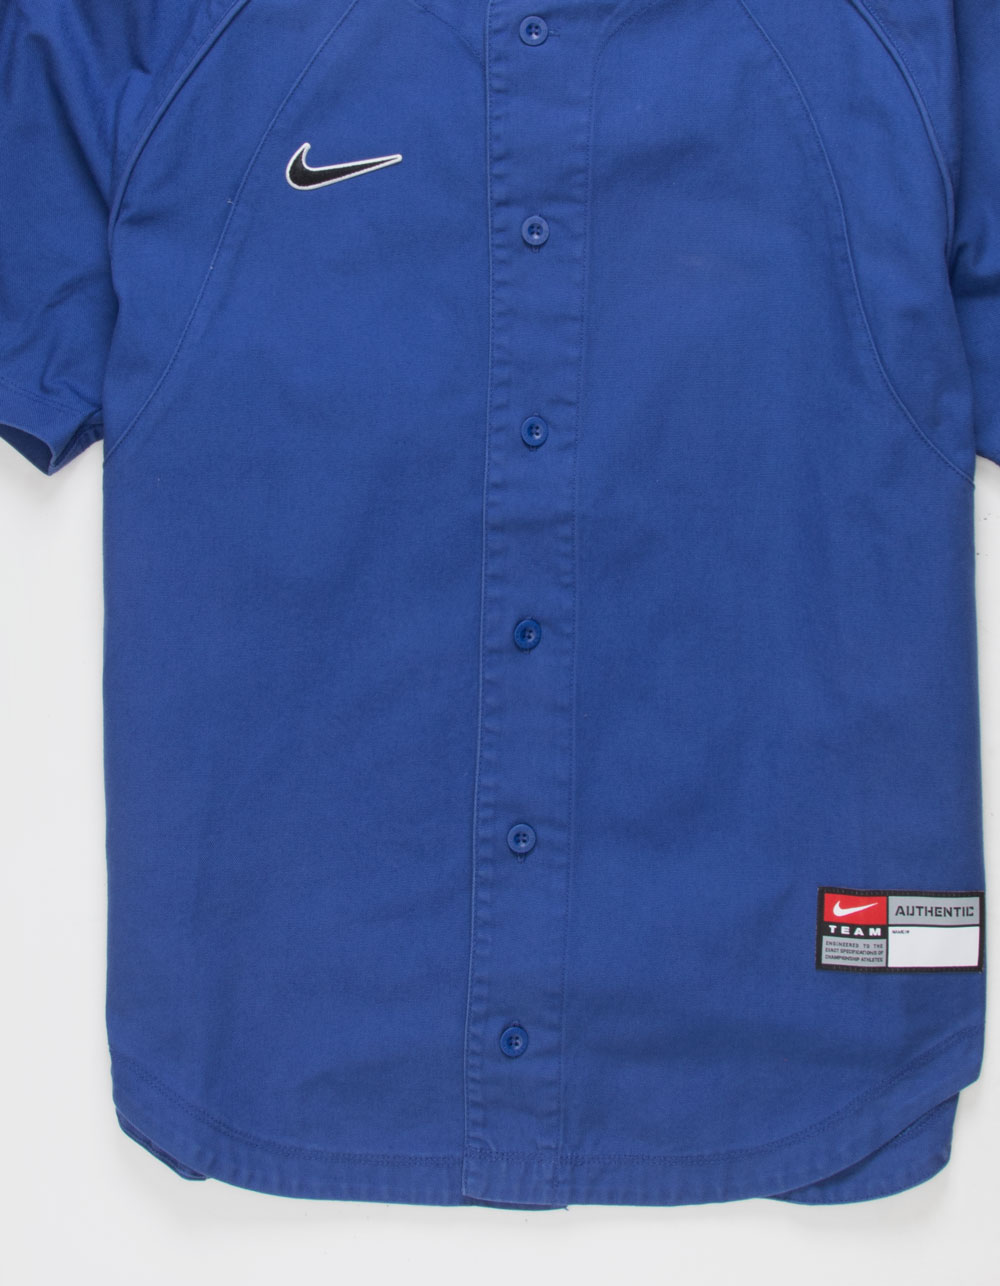 Nike SB x MLB Skate Dodgers Baseball jersey size L for Sale in